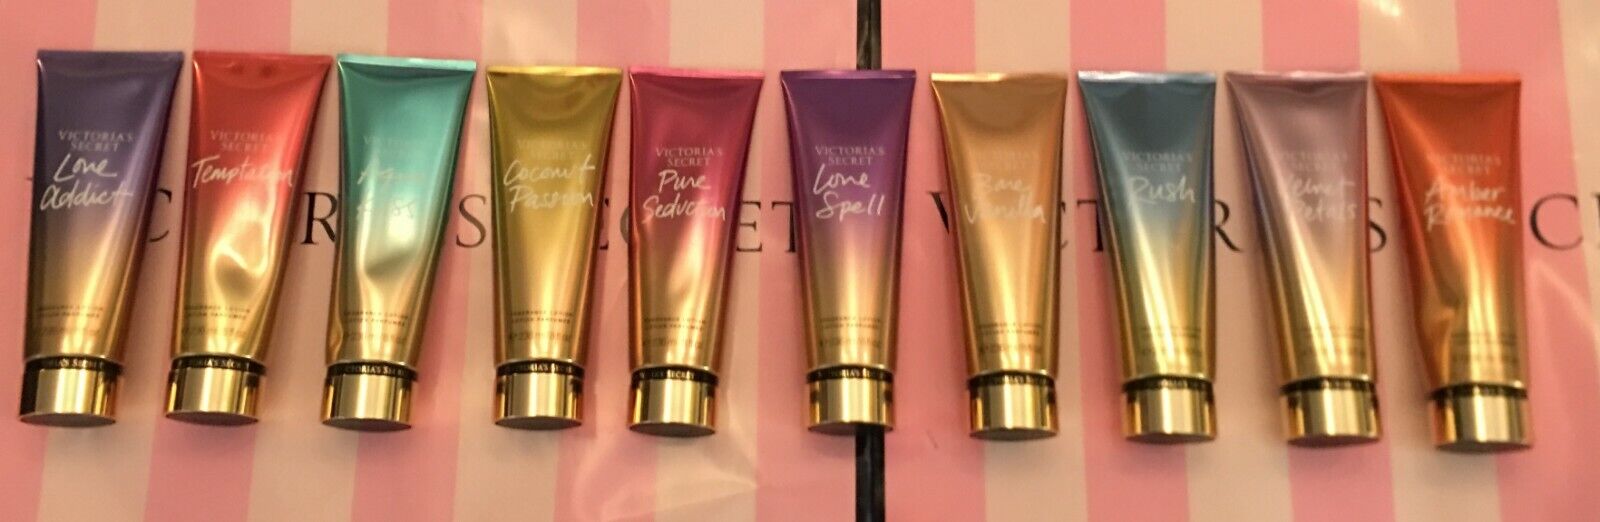 New Victoria's Secret Fantasies Fragrance Body Lotion 8 fl.oz 236 ml U Choose :) VICTORIA'S SECRET